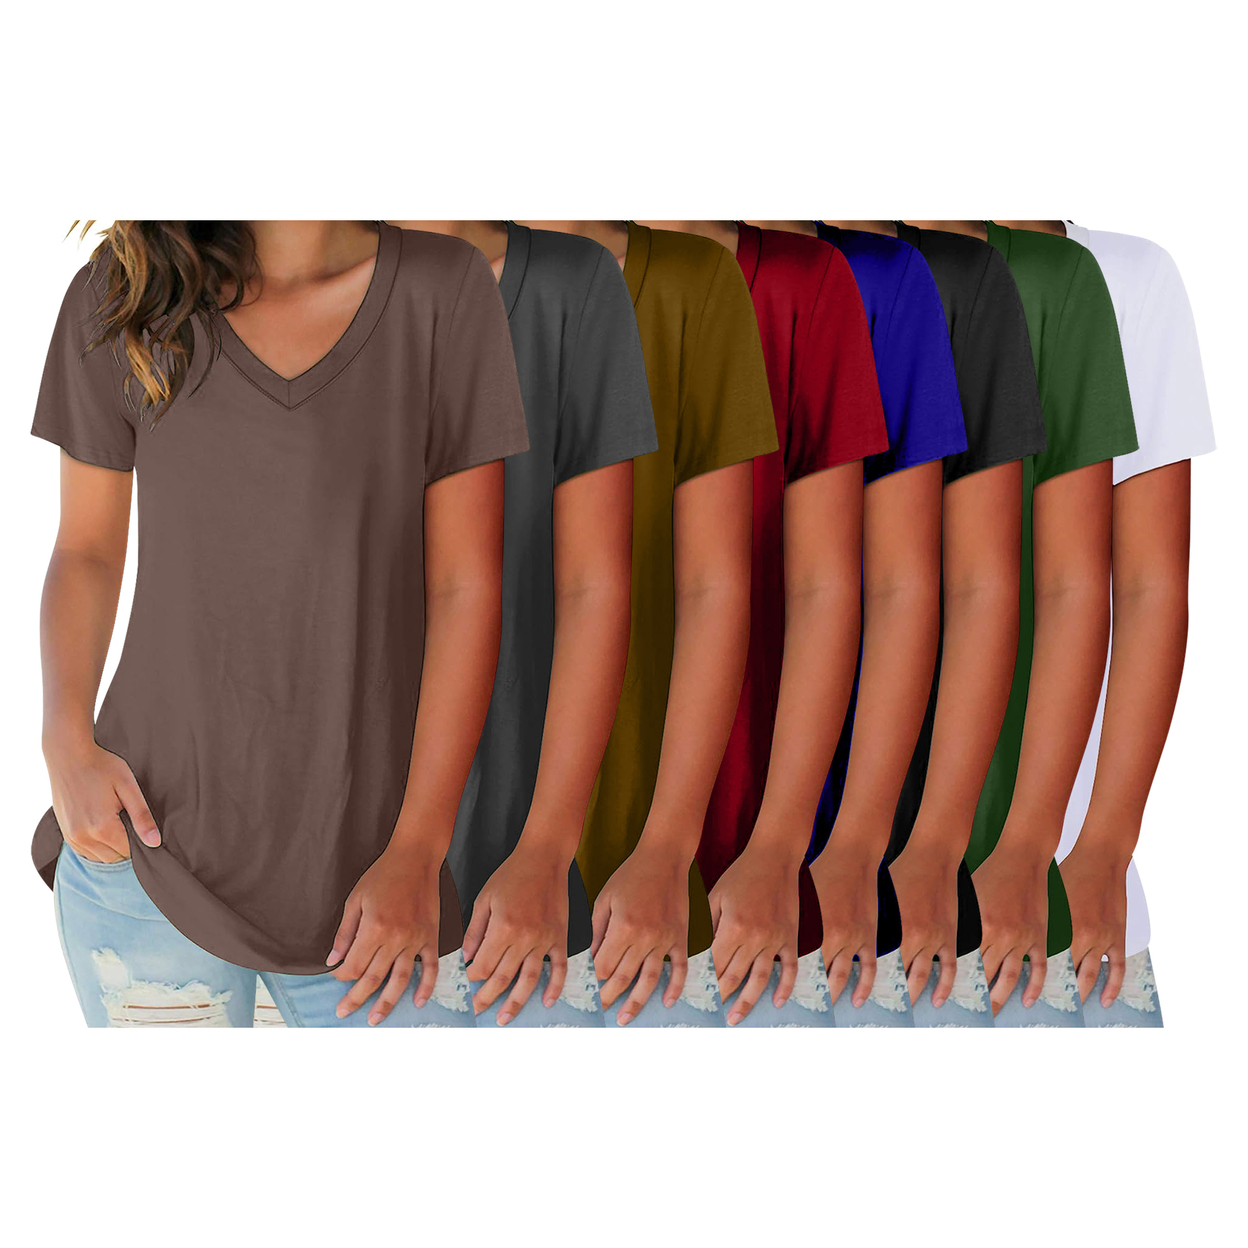 2-Pack: Women's Ultra Soft Smooth Cotton Blend Basic V-Neck Short Sleeve Shirts - Black & Red, Large